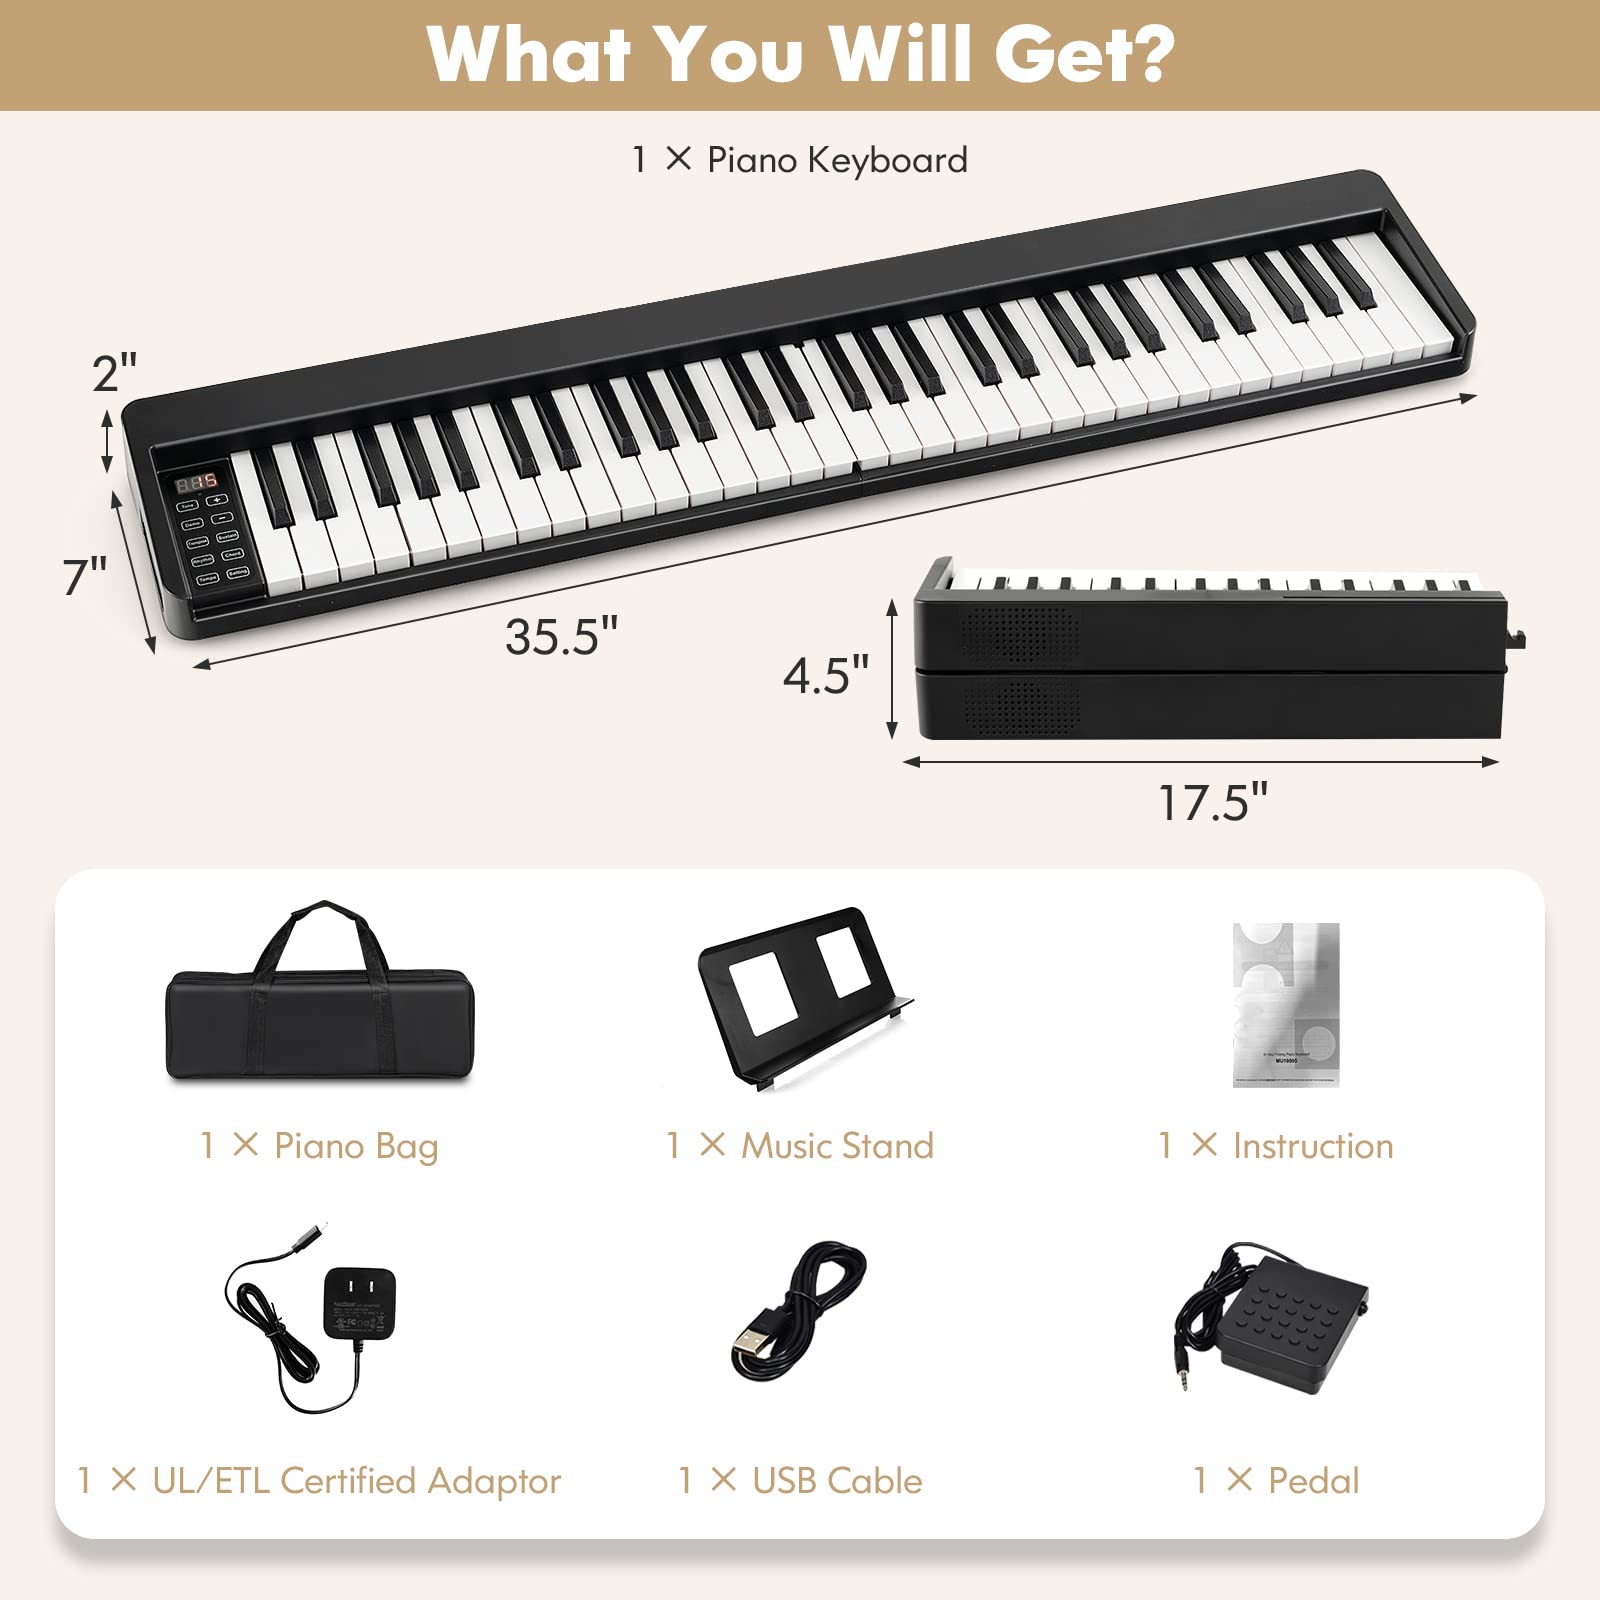 61-Key Folding Piano Keyboard - Costzon